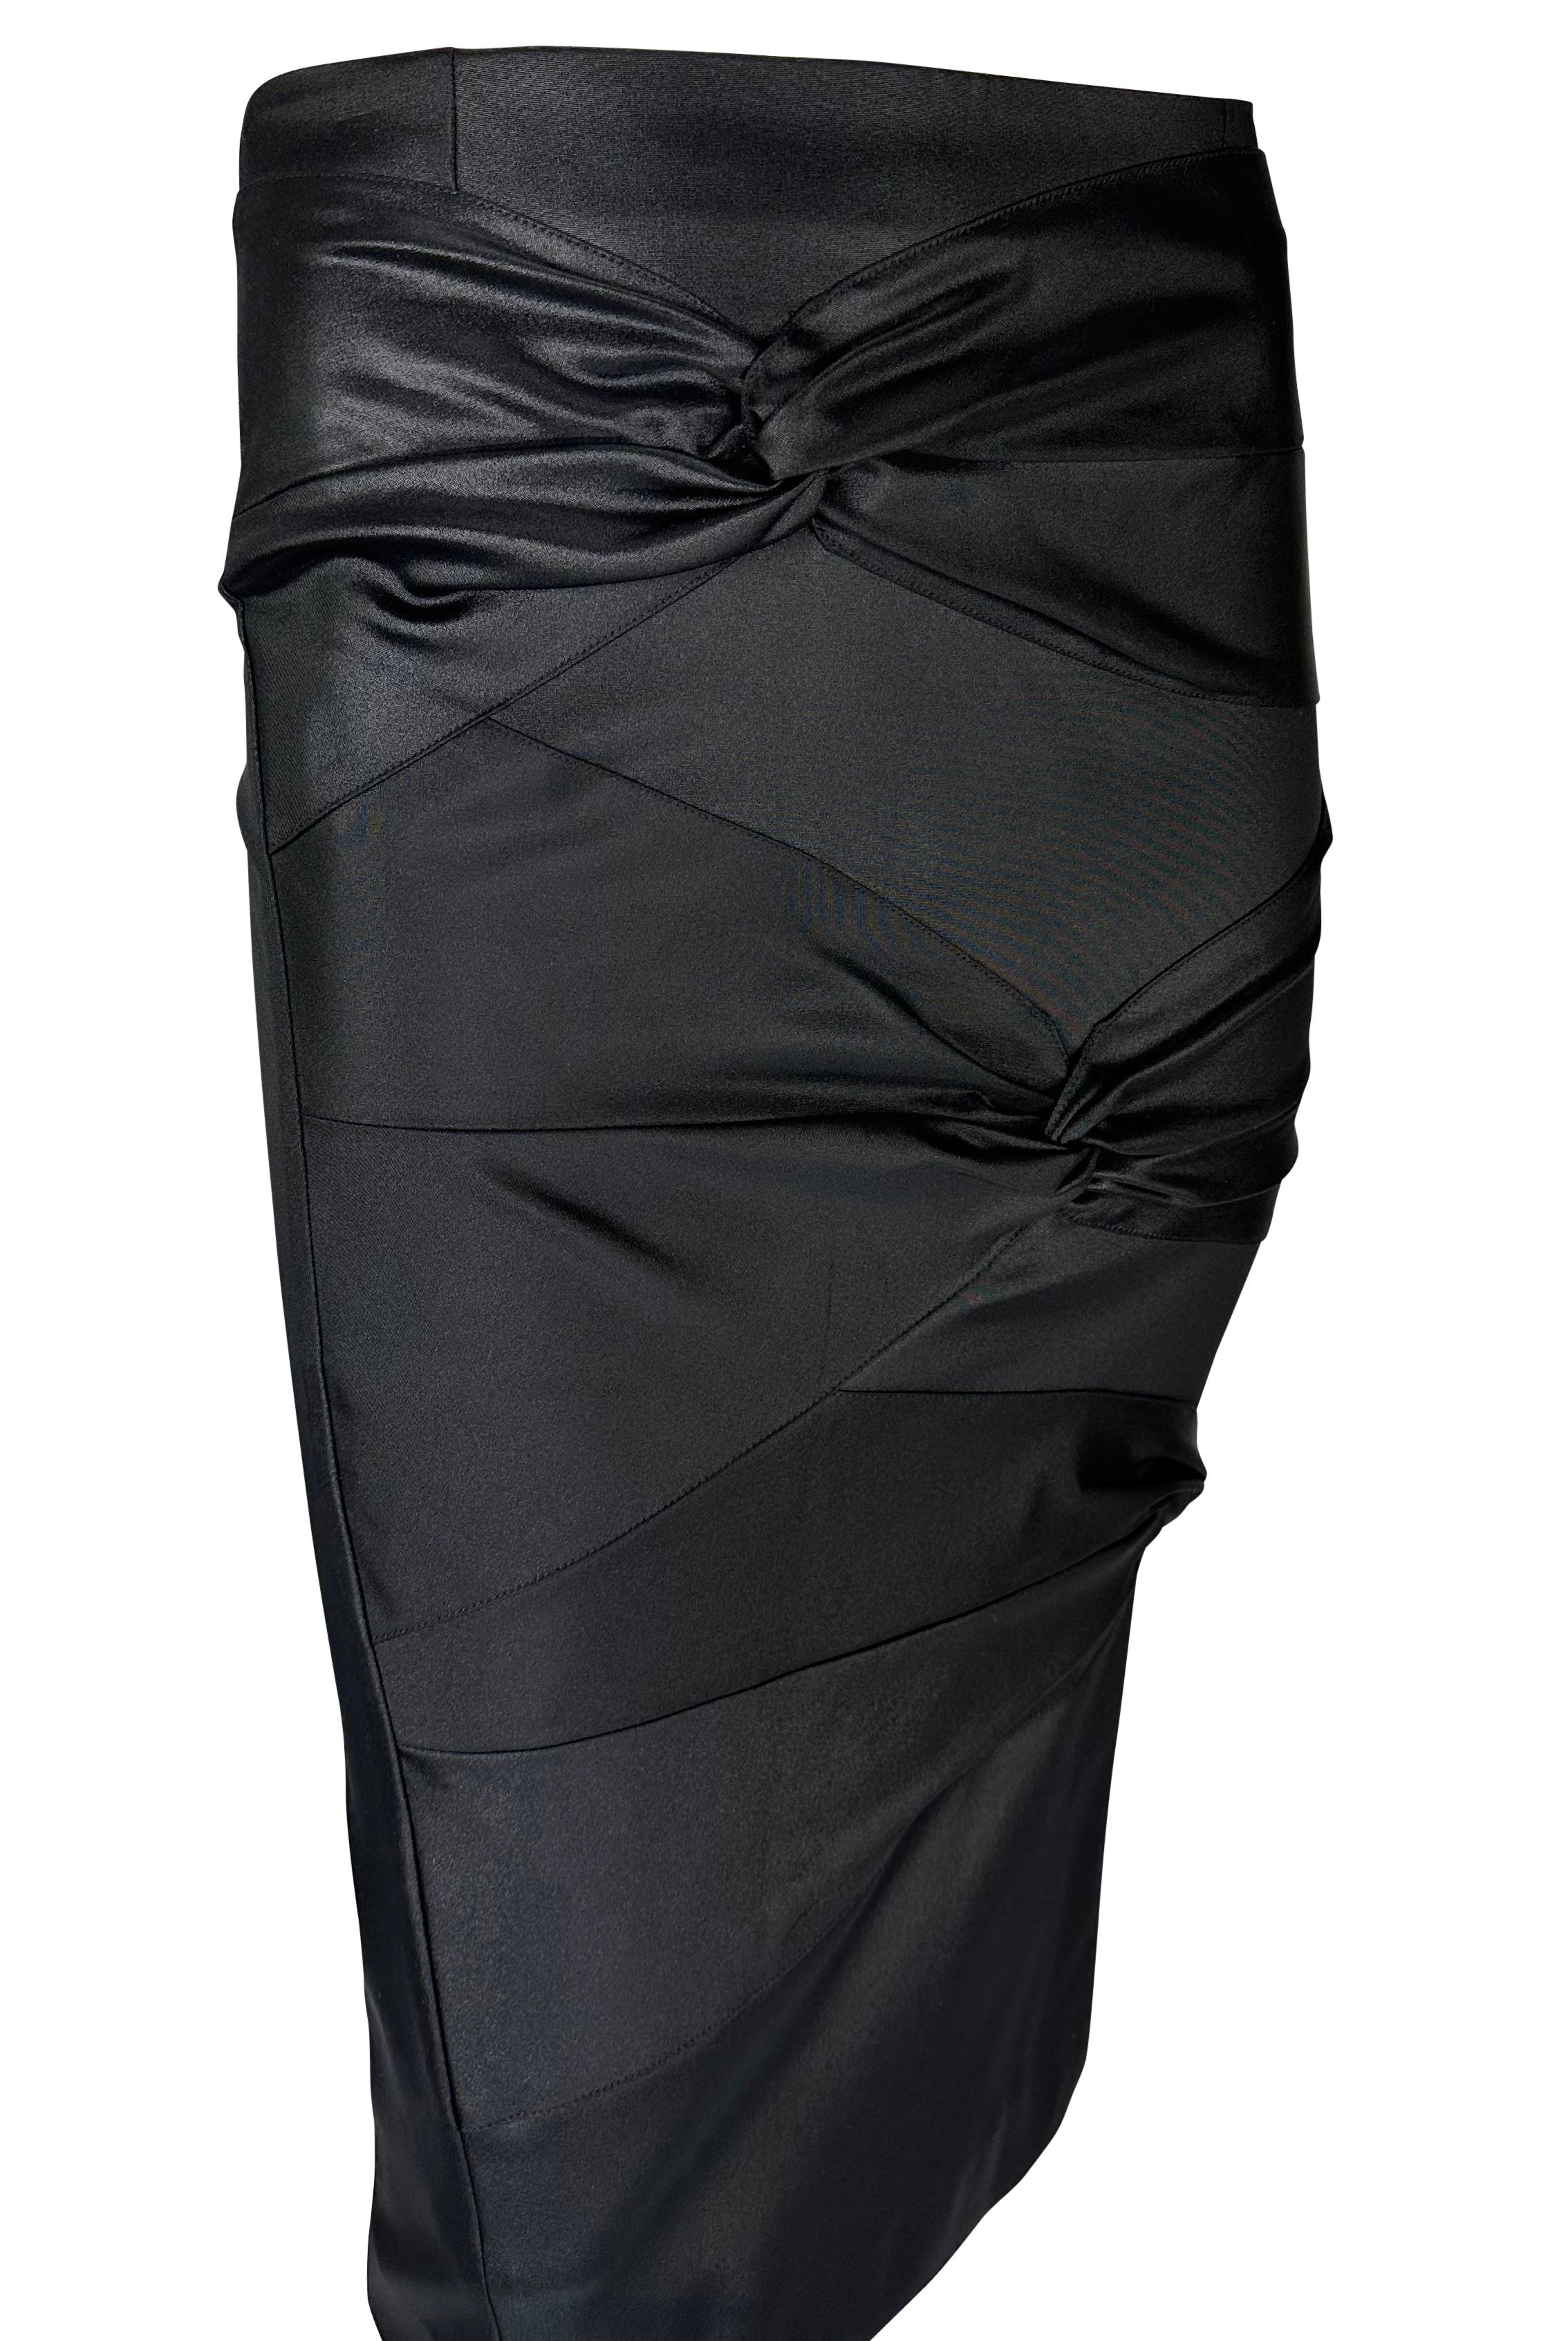 F/W 2003 Christian Dior by John Galliano for Tie Accenture Bodycon Stretch Skirt (jupe extensible avec nœud de cravate) en vente 4